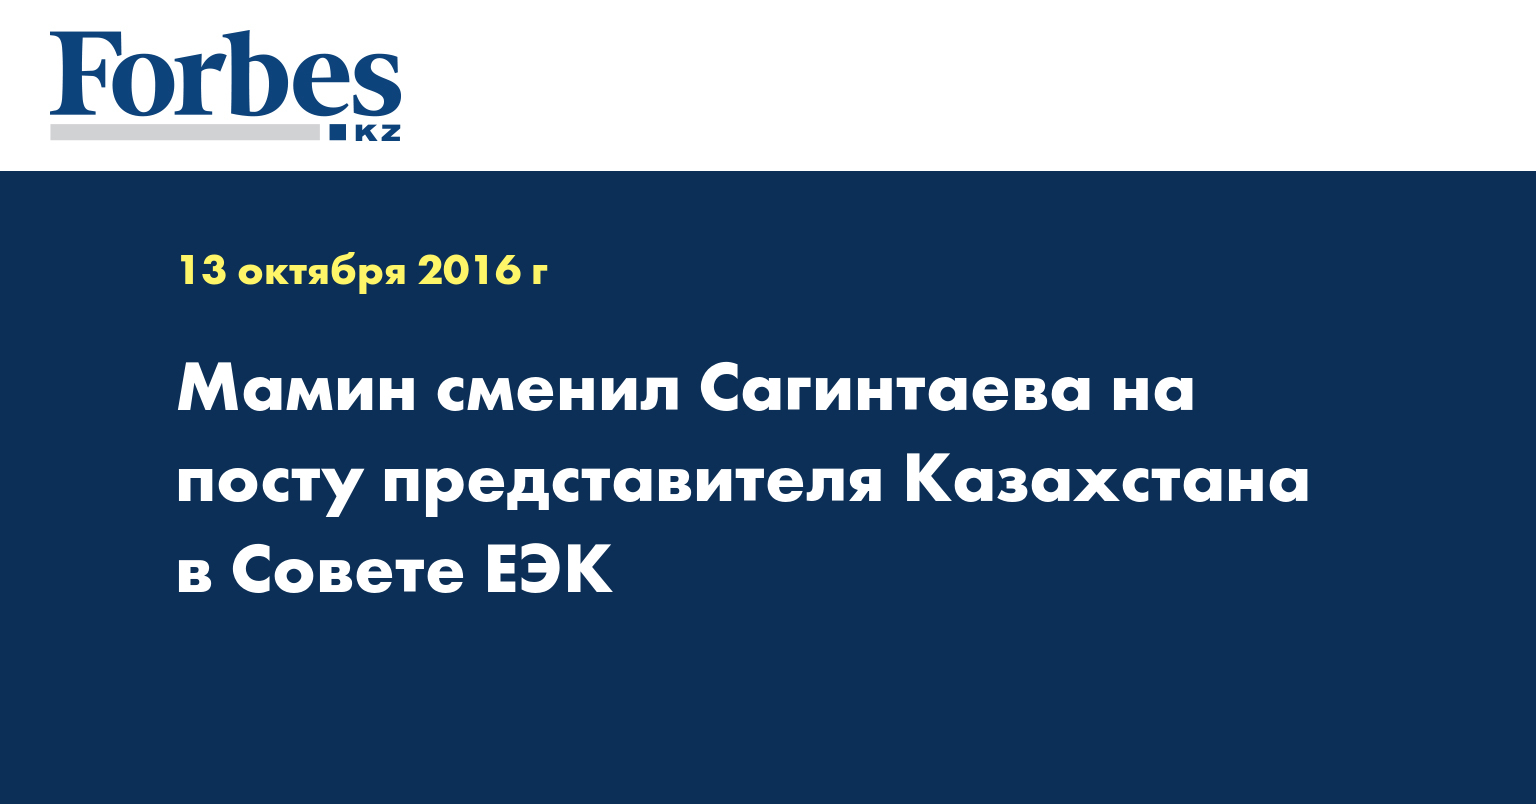 Мамин сменил Сагинтаева на посту представителя Казахстана в Совете ЕЭК